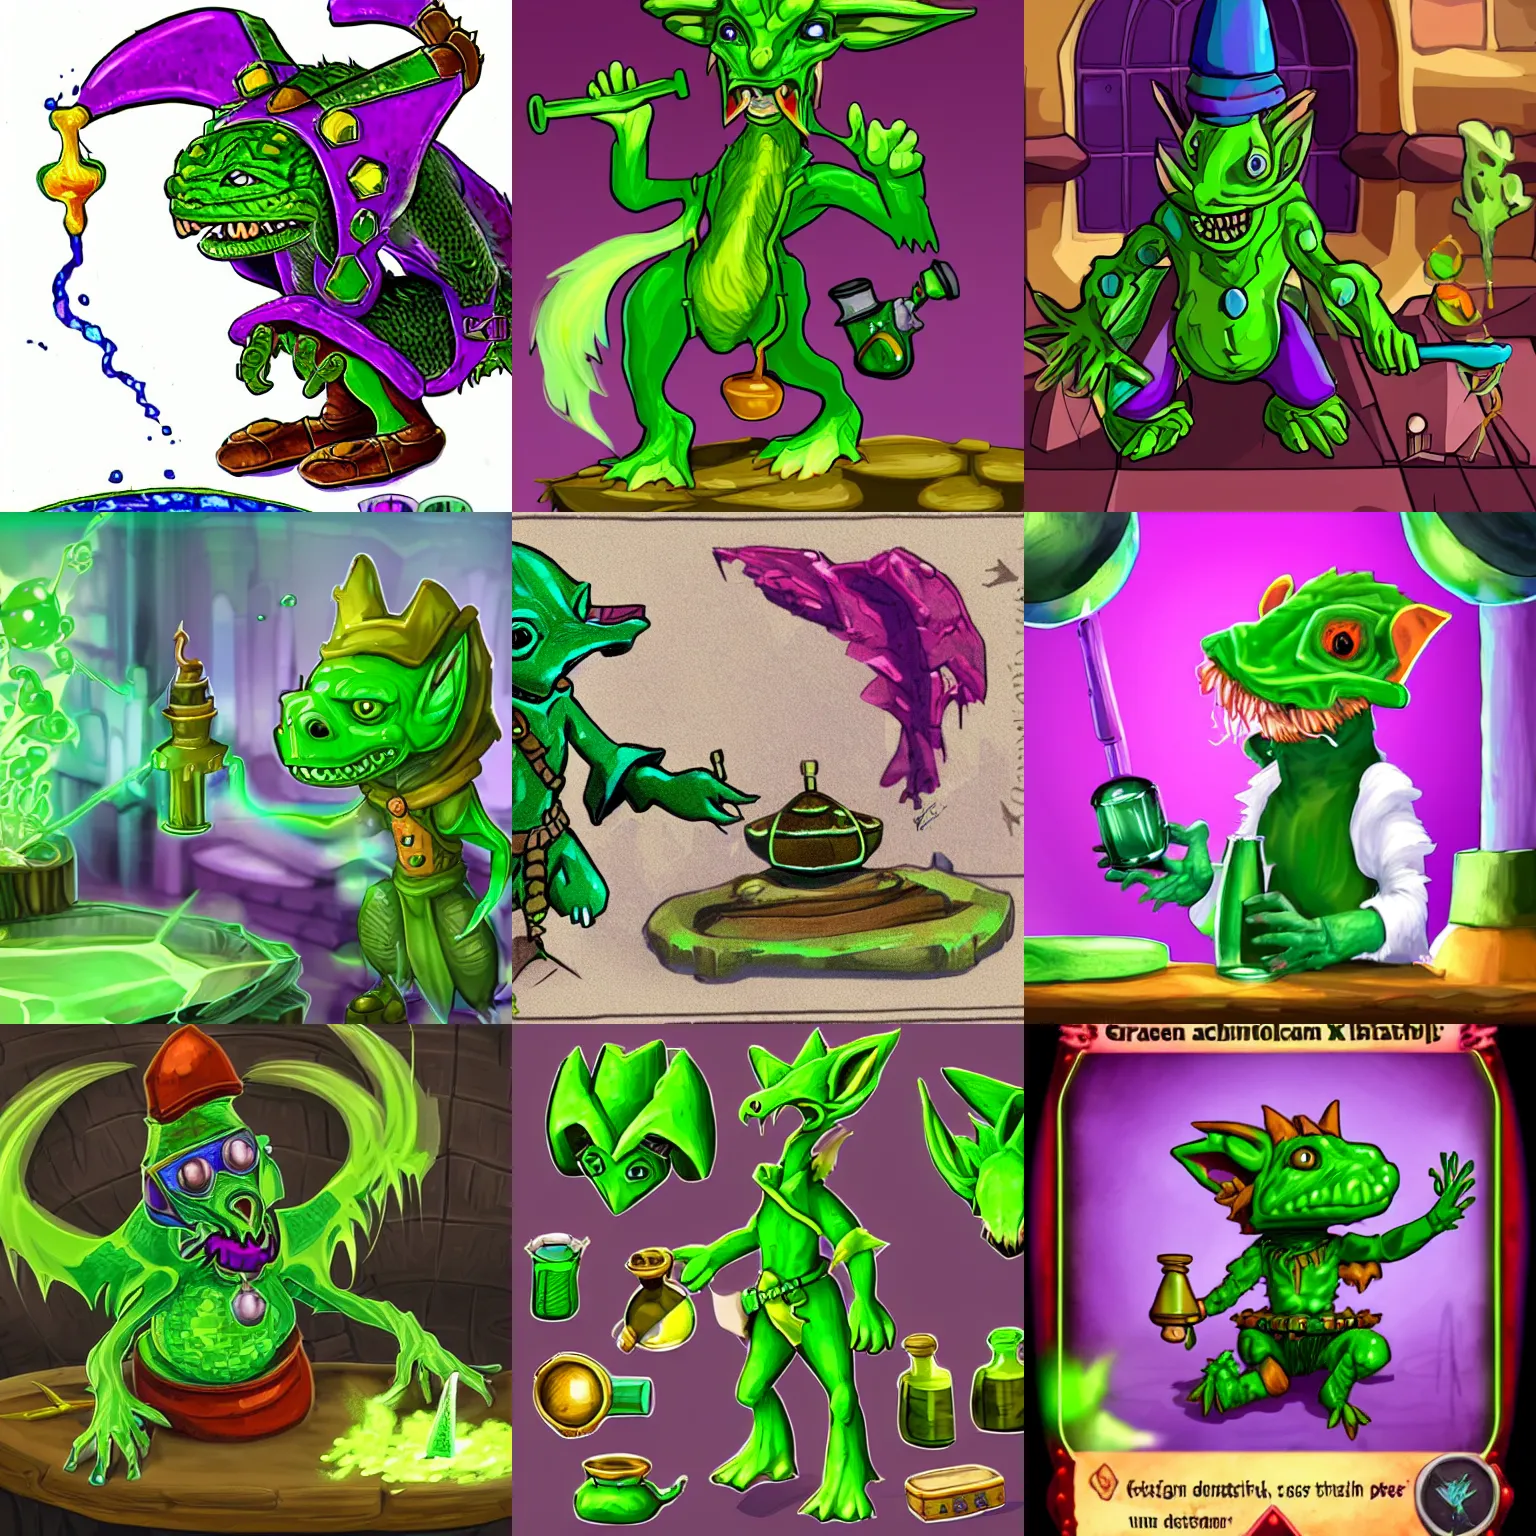 Prompt: green kobold alchemist preparing potions, vibrant, colorful, beautiful space, very high quality, sharp, crisp